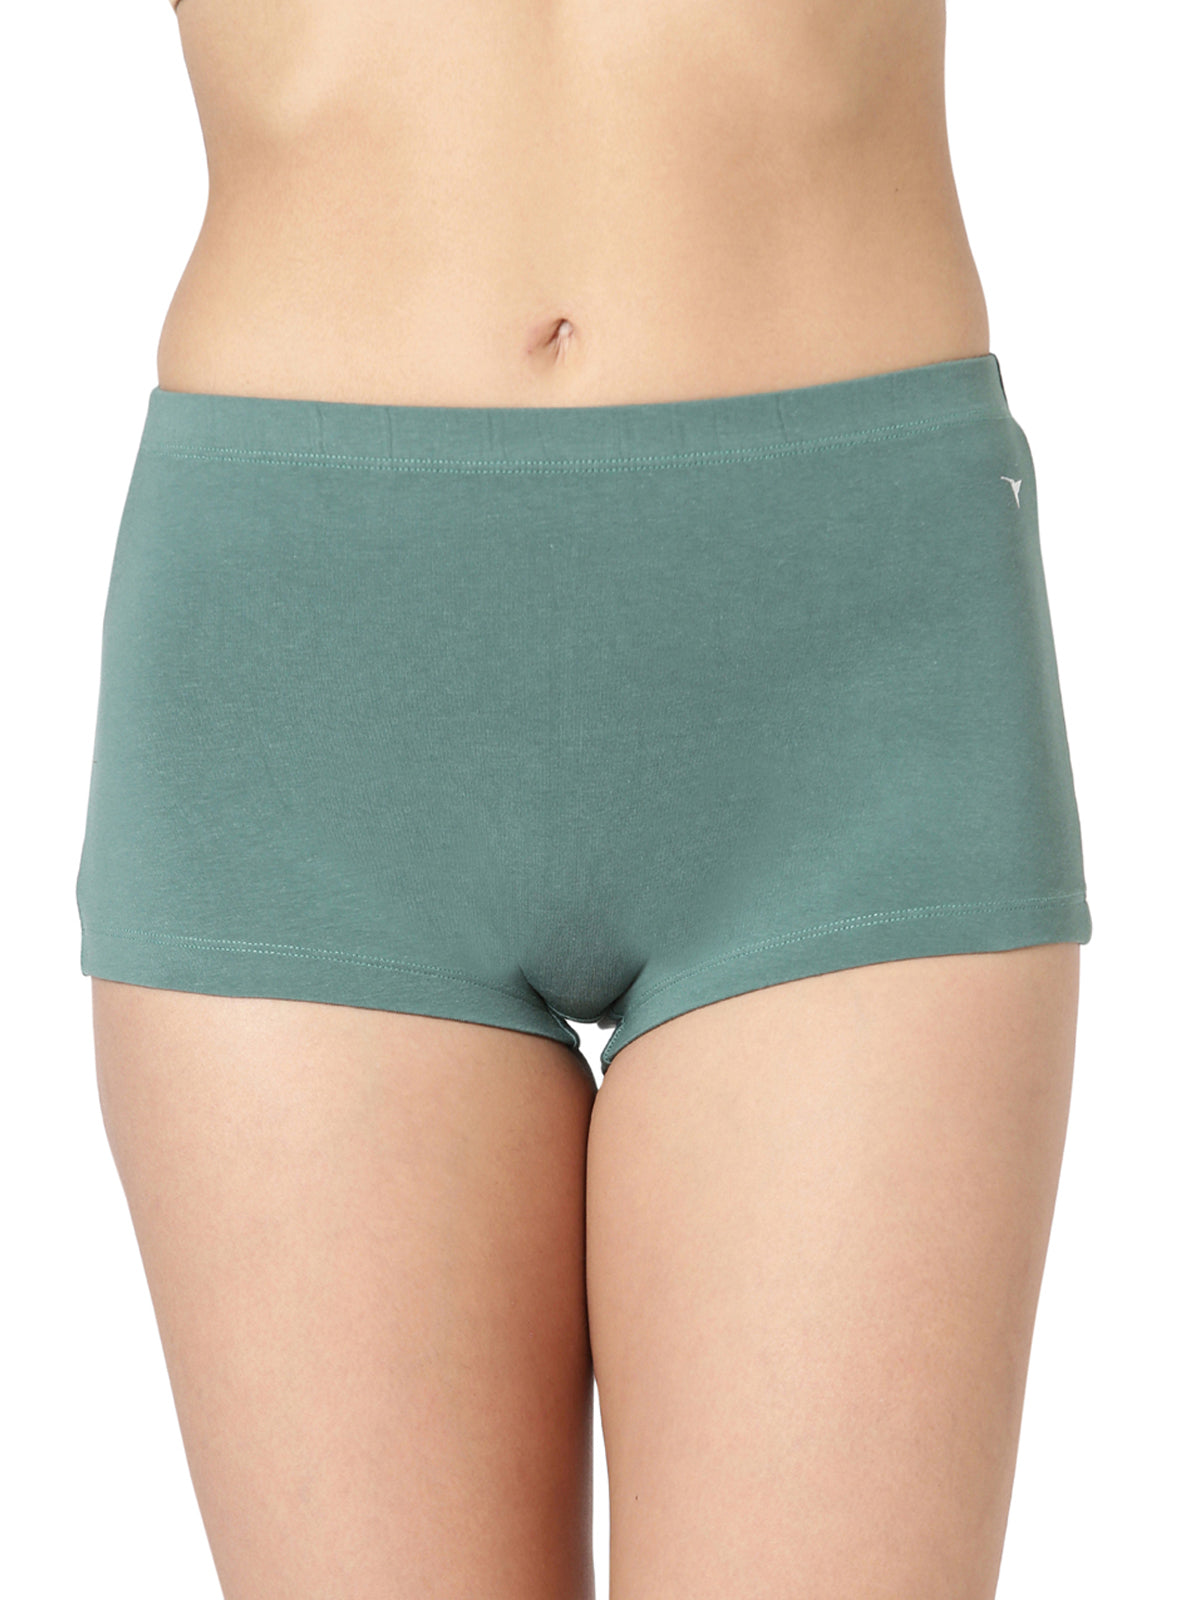 Slanted Shorts Panties _Pack of 2